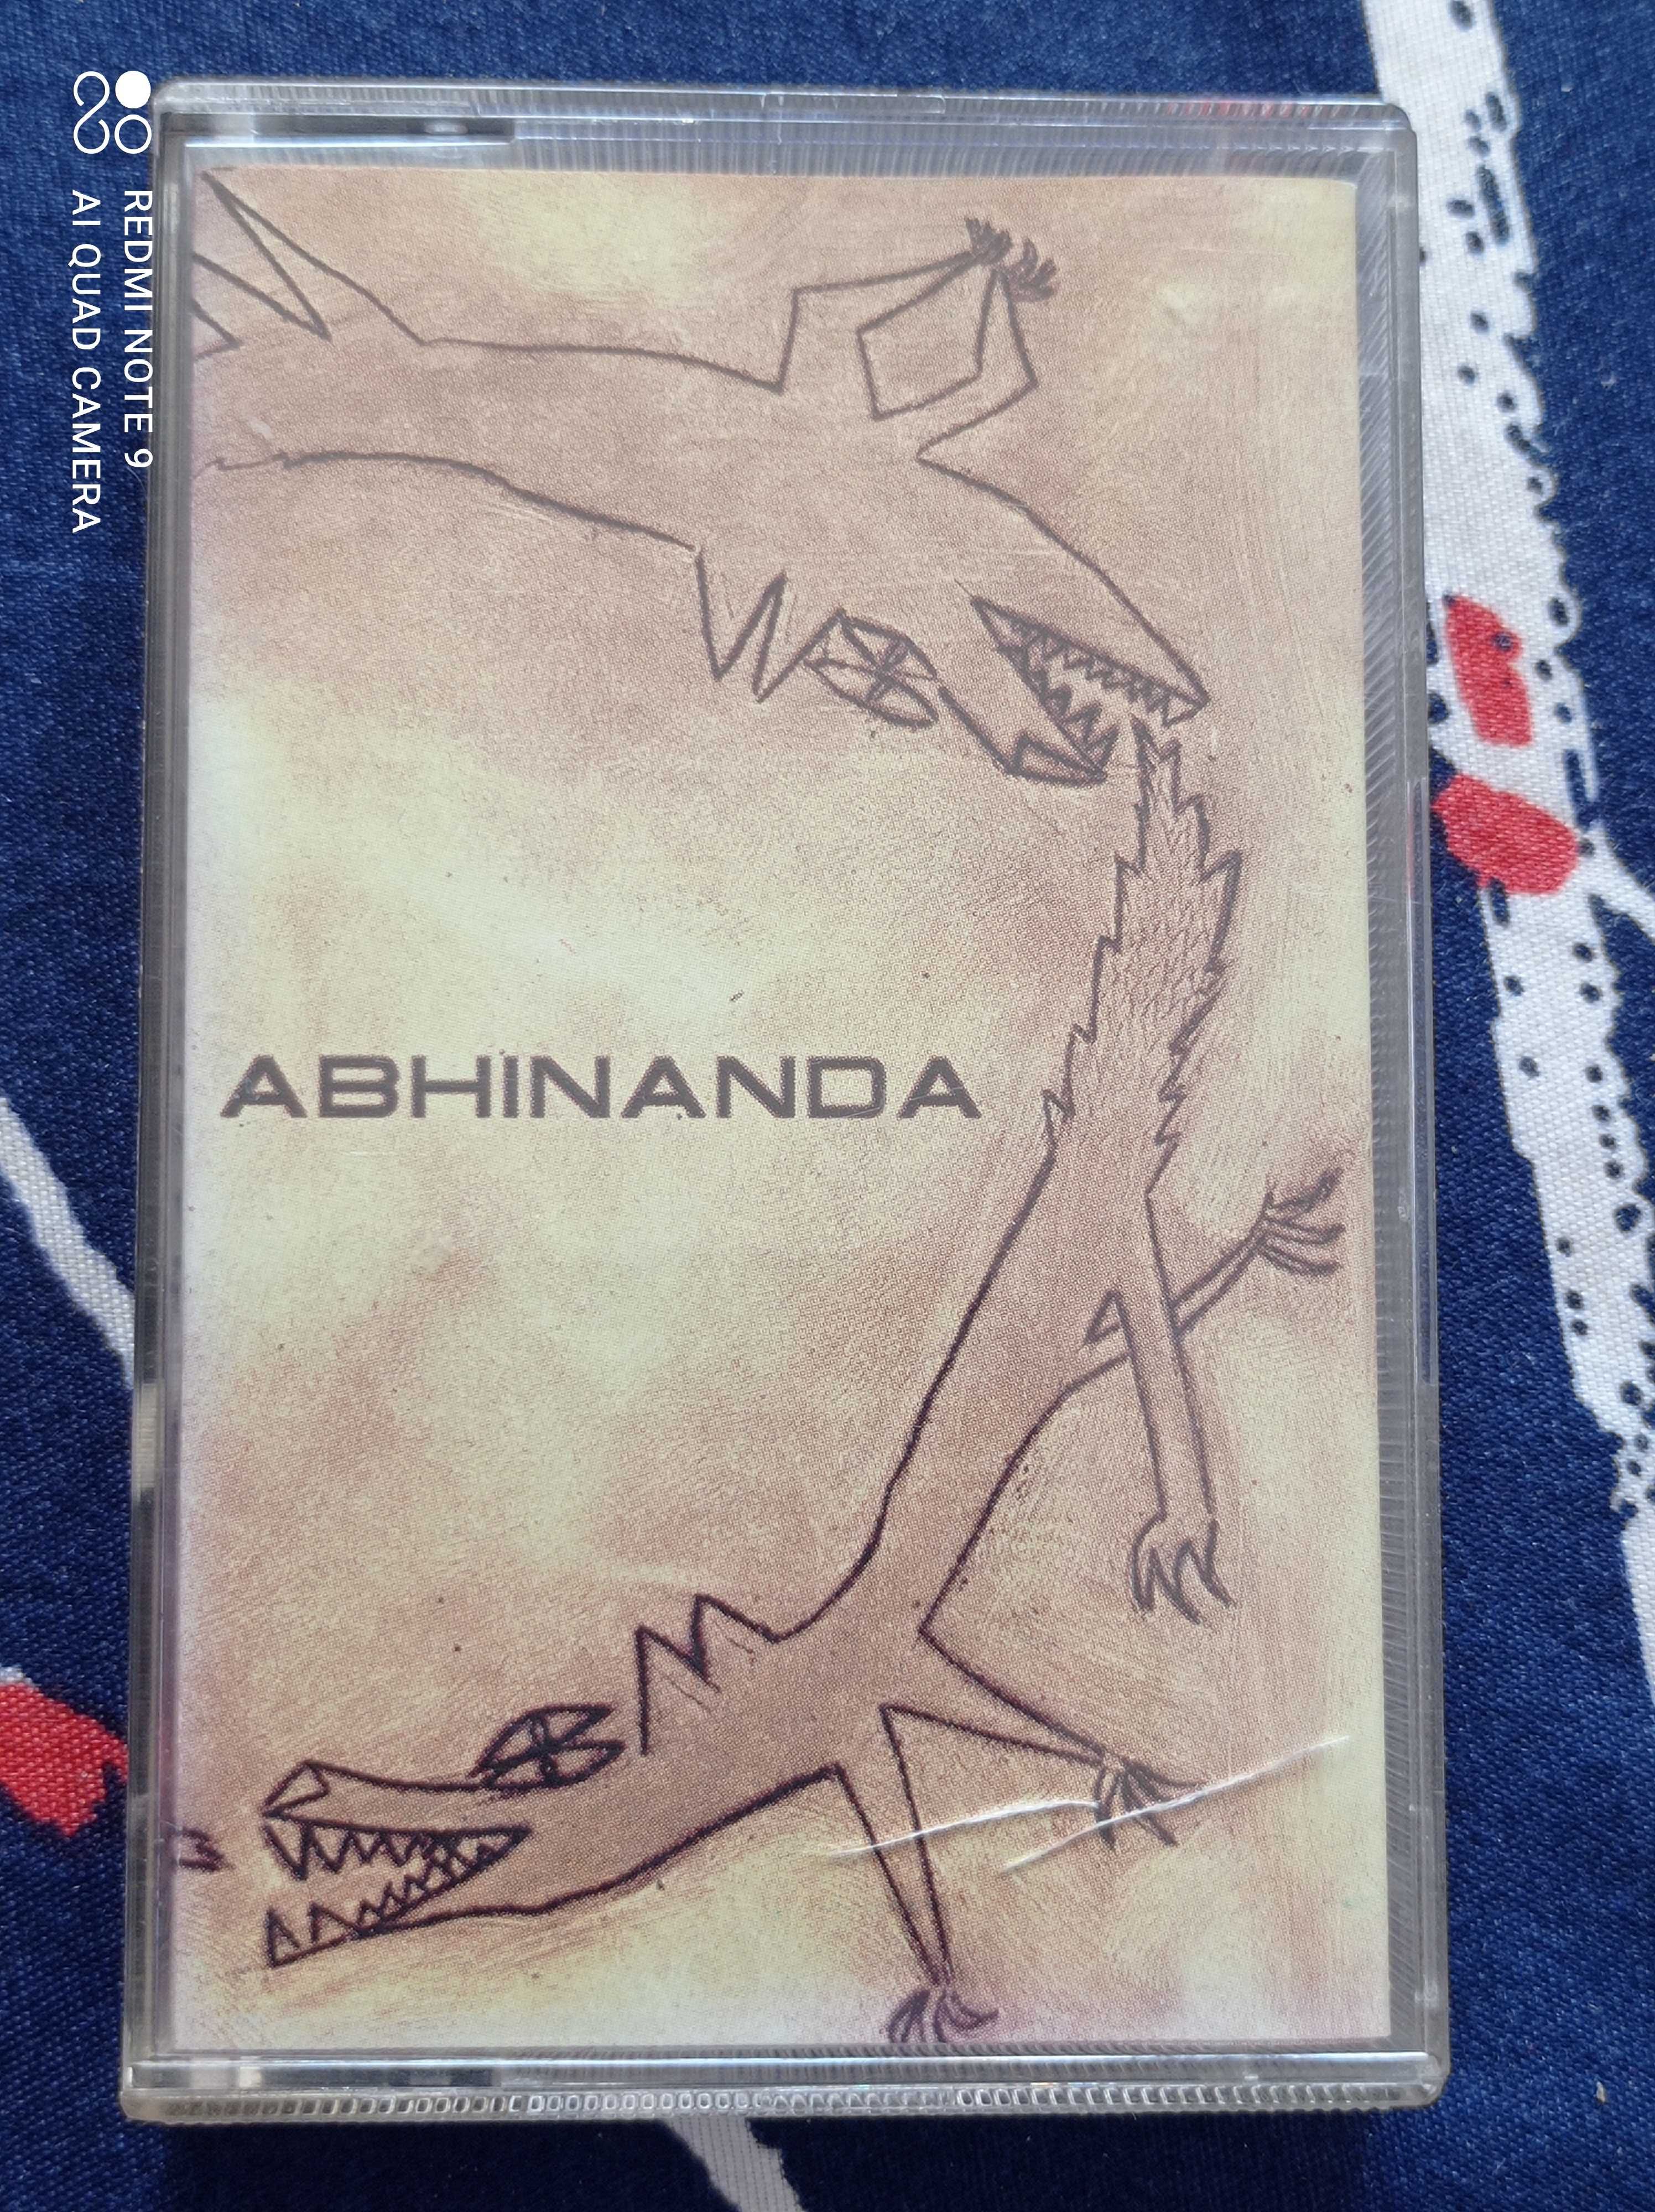 Abhinanda - s/t kaseta hardcore straight Edge Refused Purusam